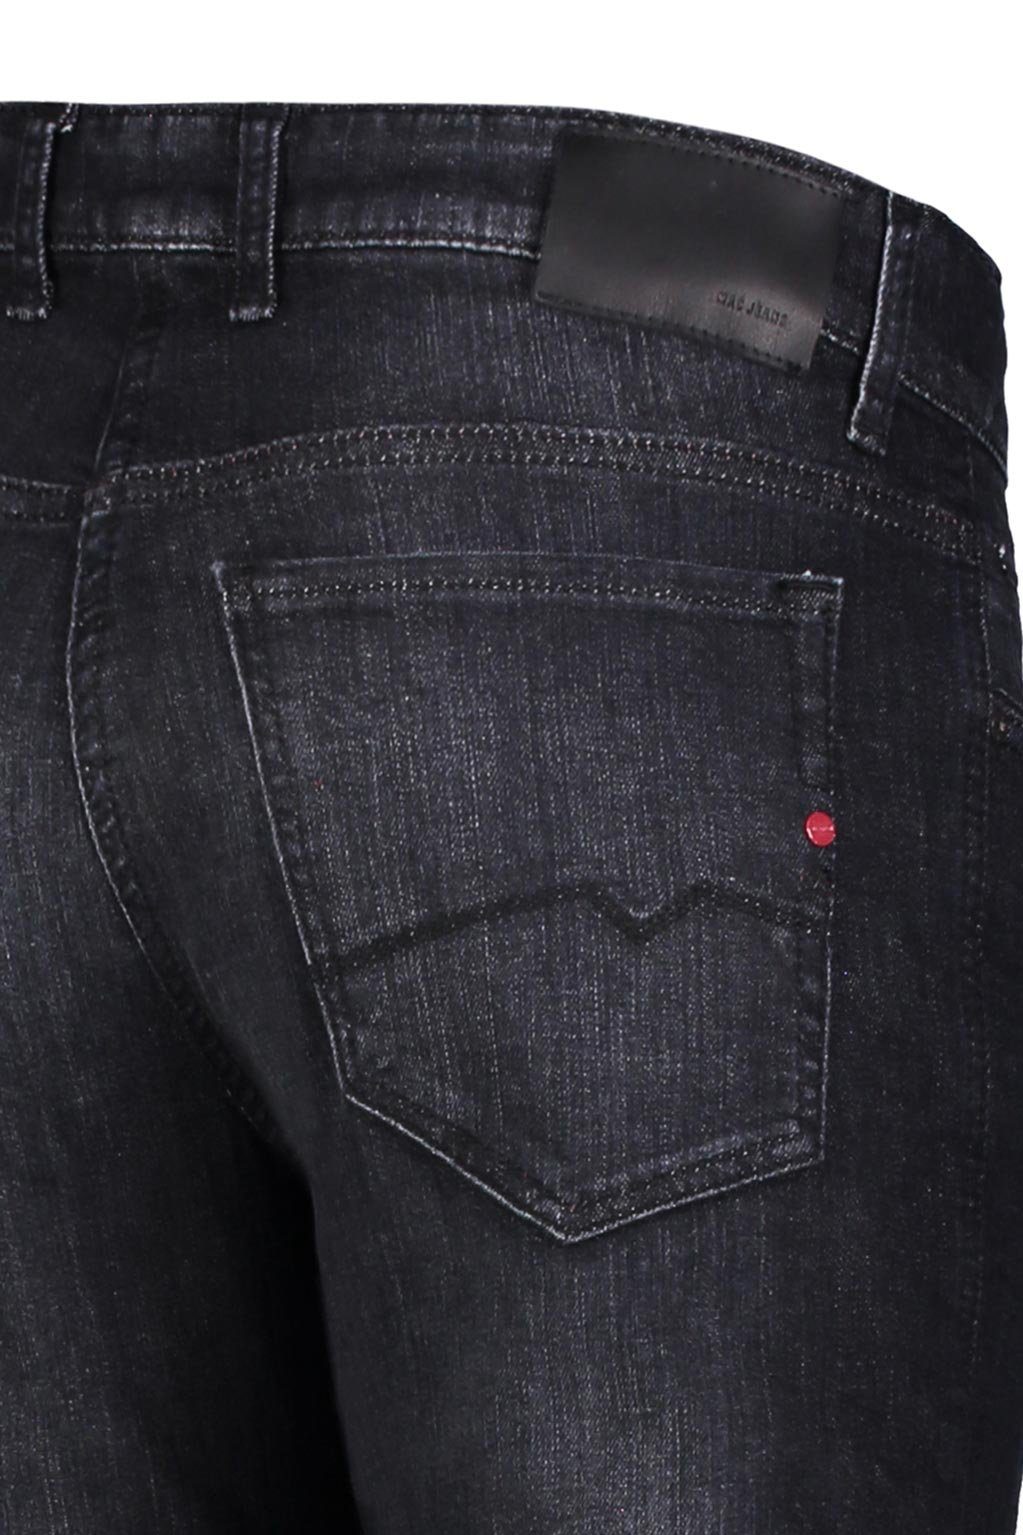 H878 LEATHER 5-Pocket-Jeans vintage 0516-00-1973L - DENIMFLEXX ARNE used MAC MAC black